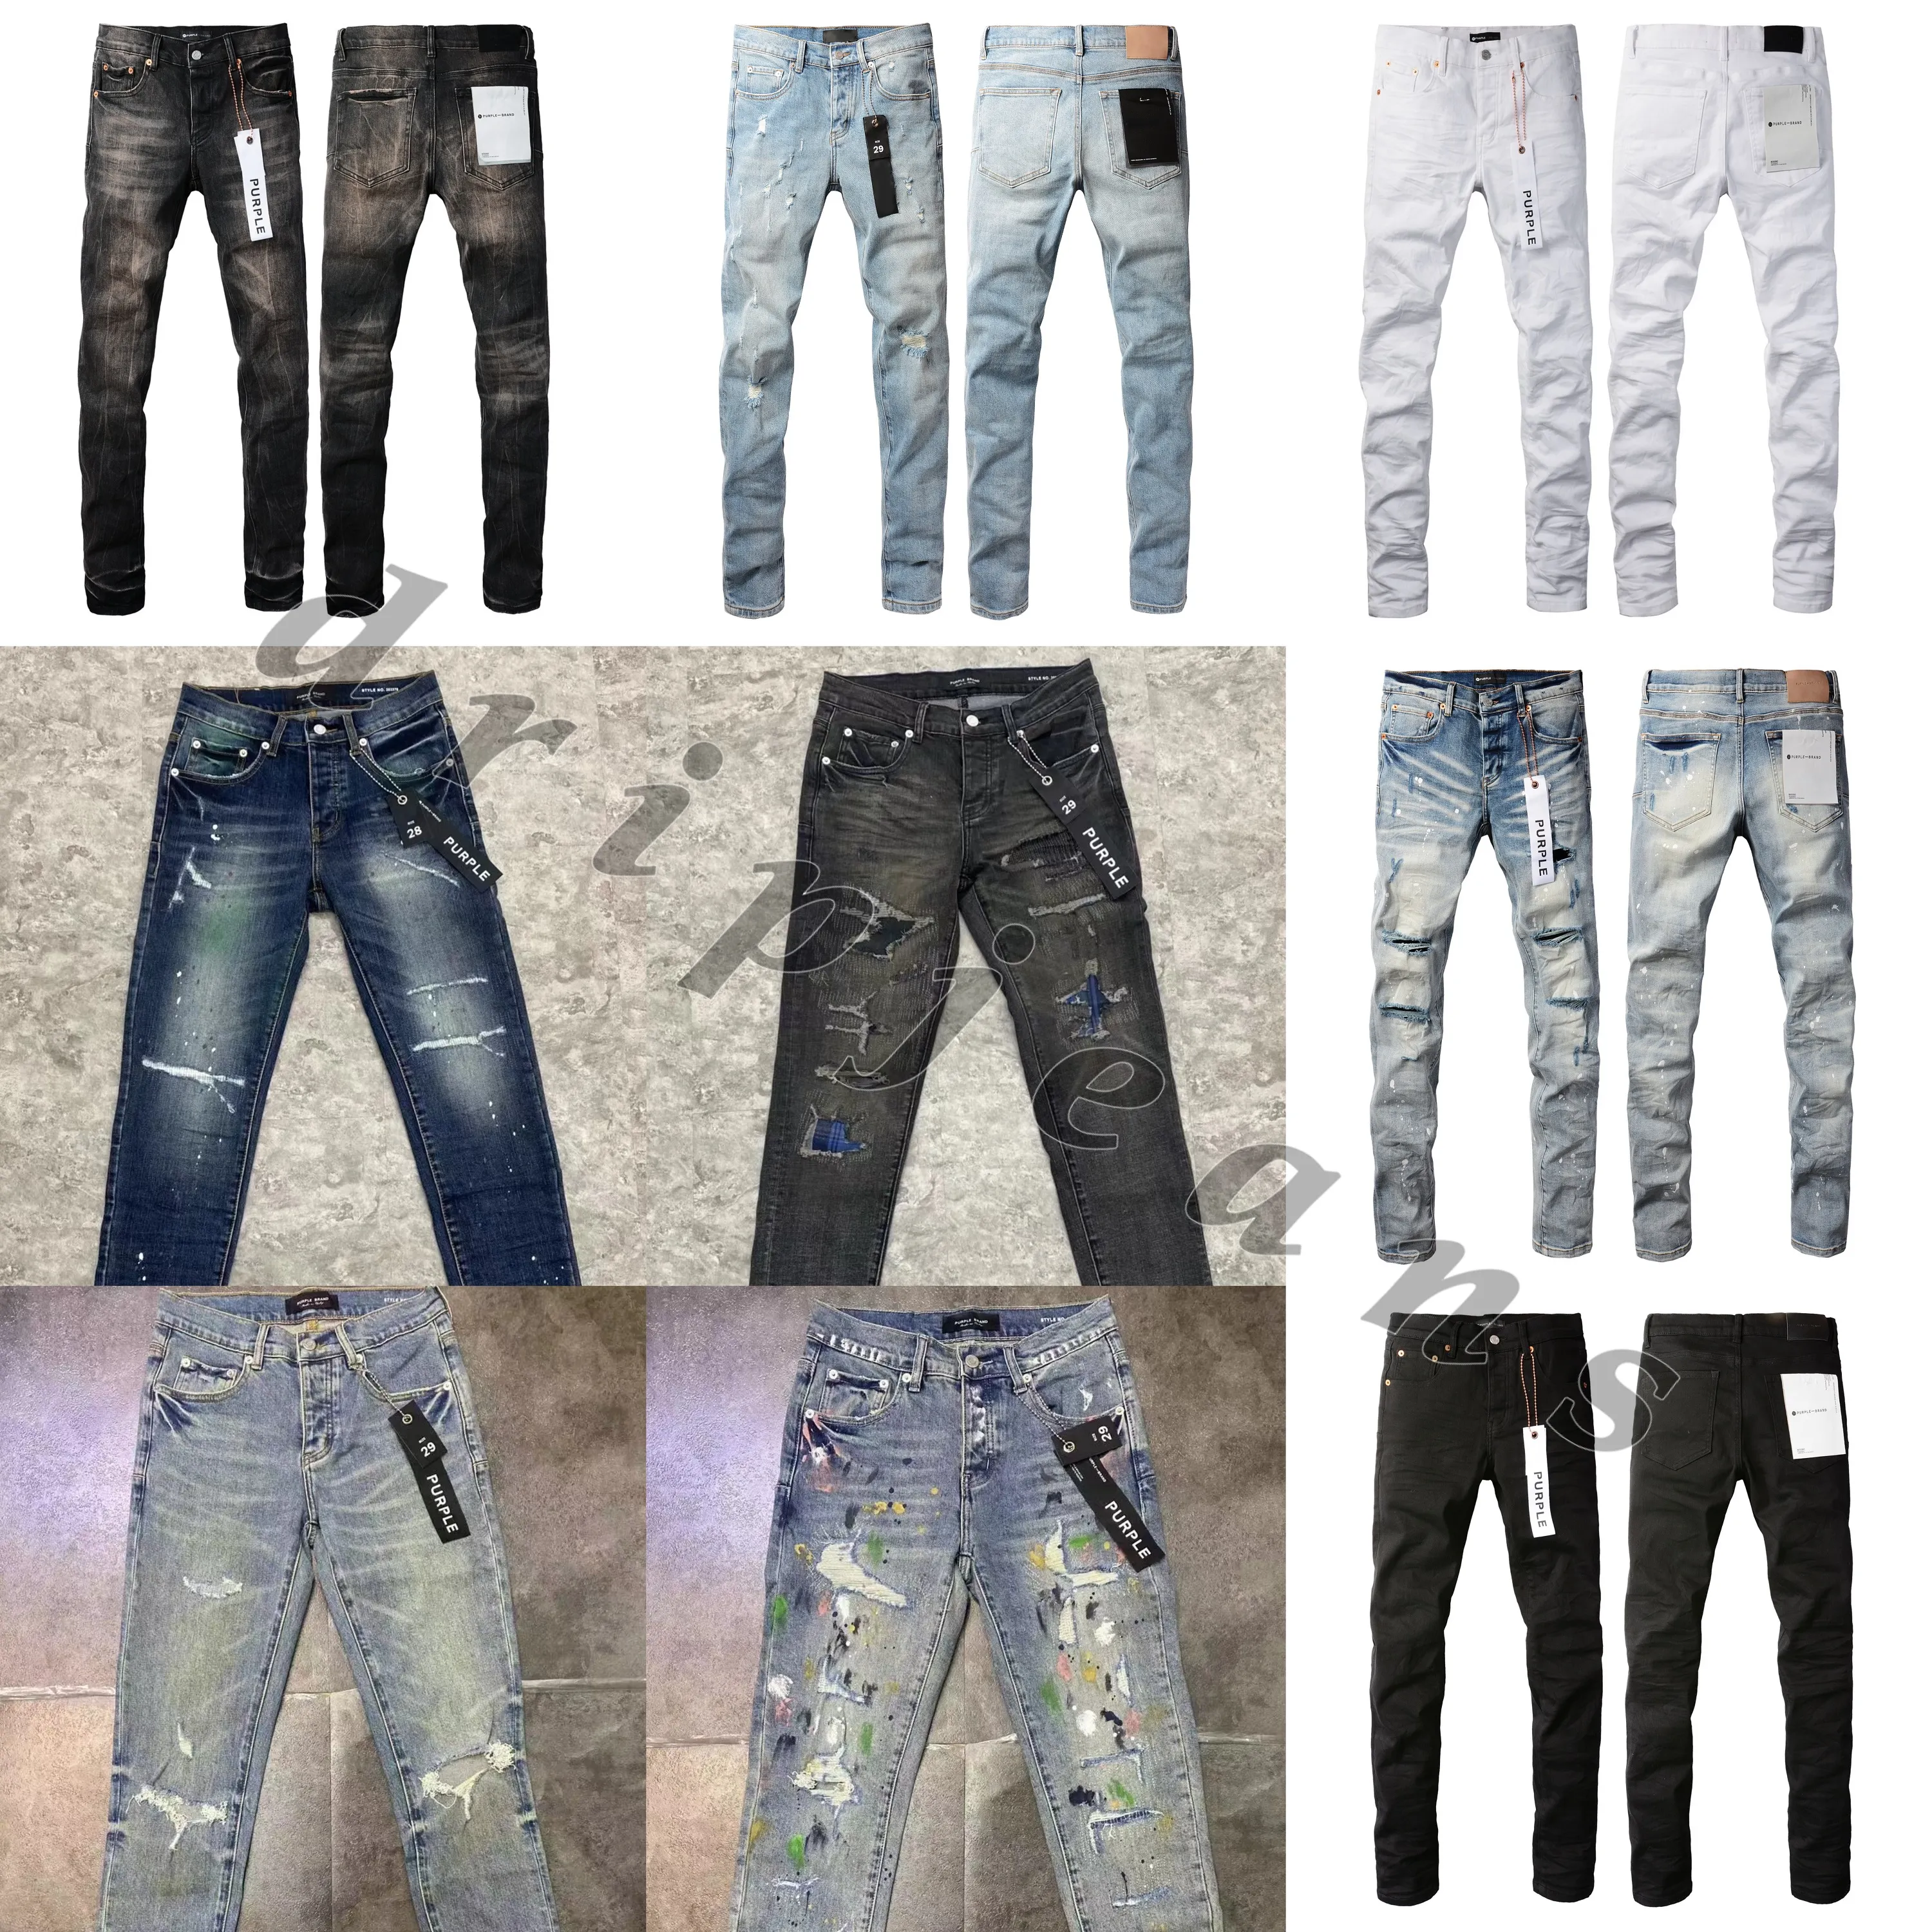 Spezielle Clearance-Purpur-Jeans Herren Jeans hochwertige Jeans Designer Jeans Slim Fit Jeans Tropf Jeans Skinny Jeans USA Tropf Hiphop Jeans Purple Brand Jeans